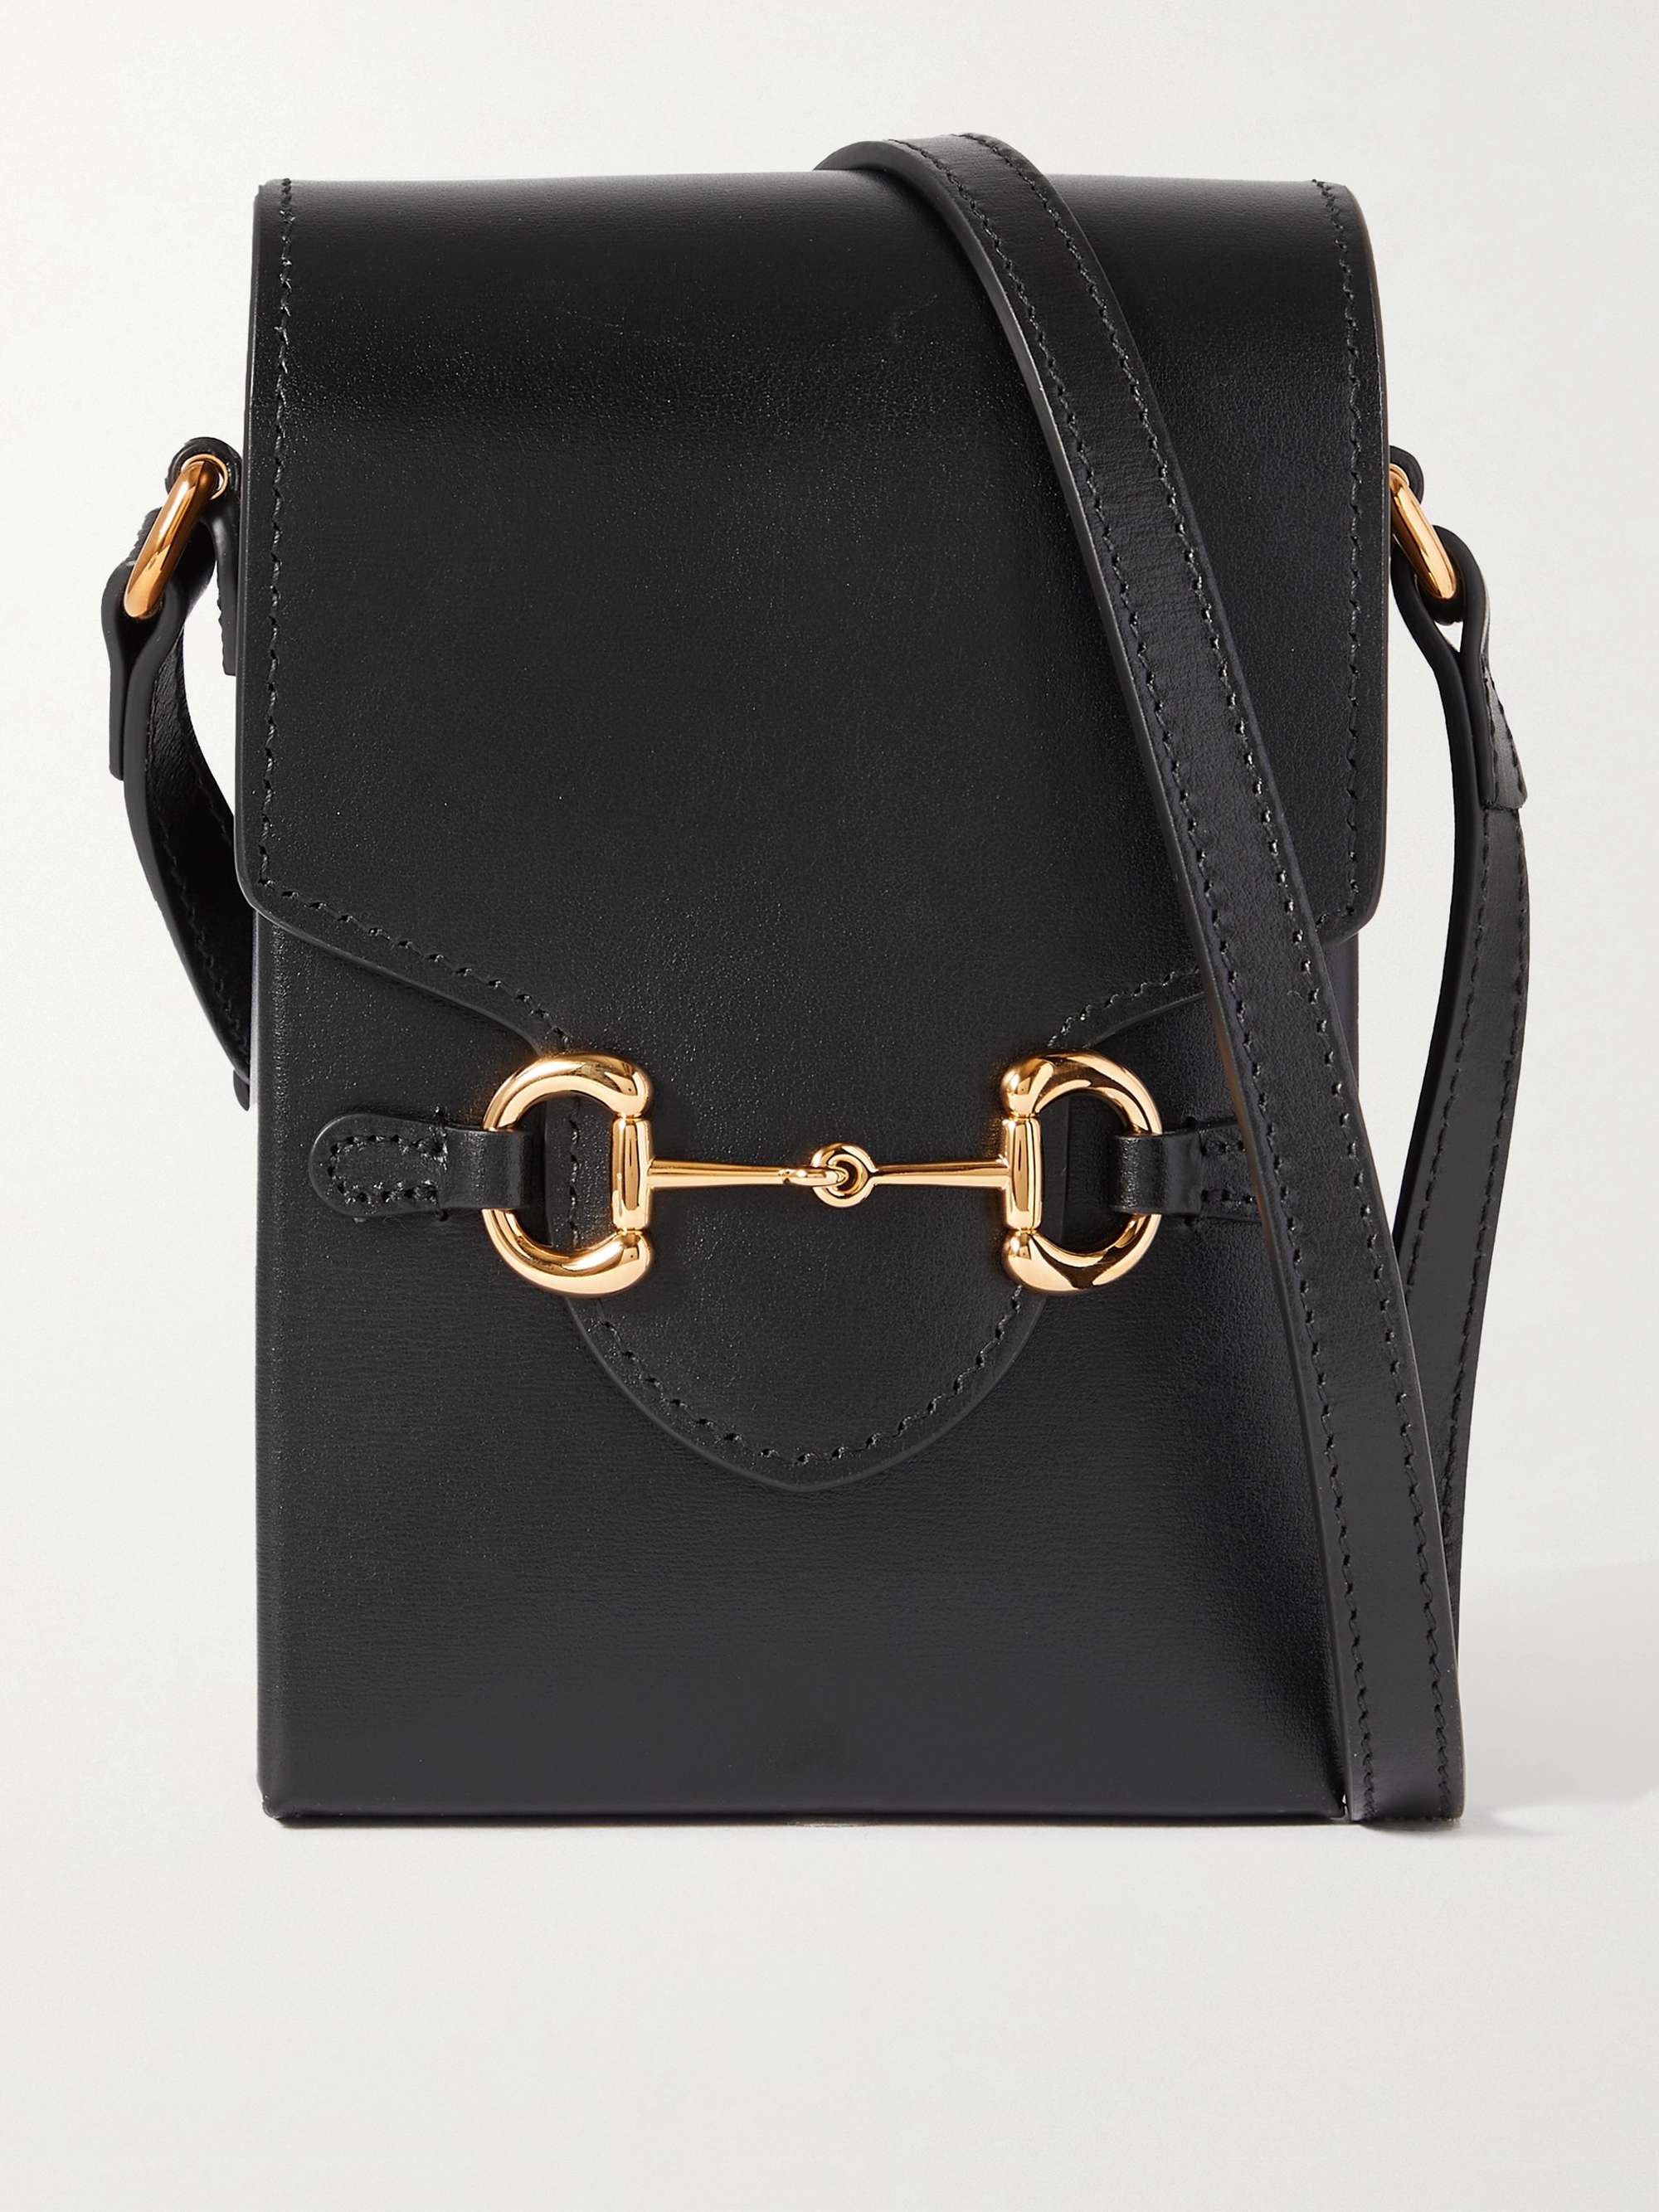 GUCCI 1955 Horsebit Leather Messenger Bag